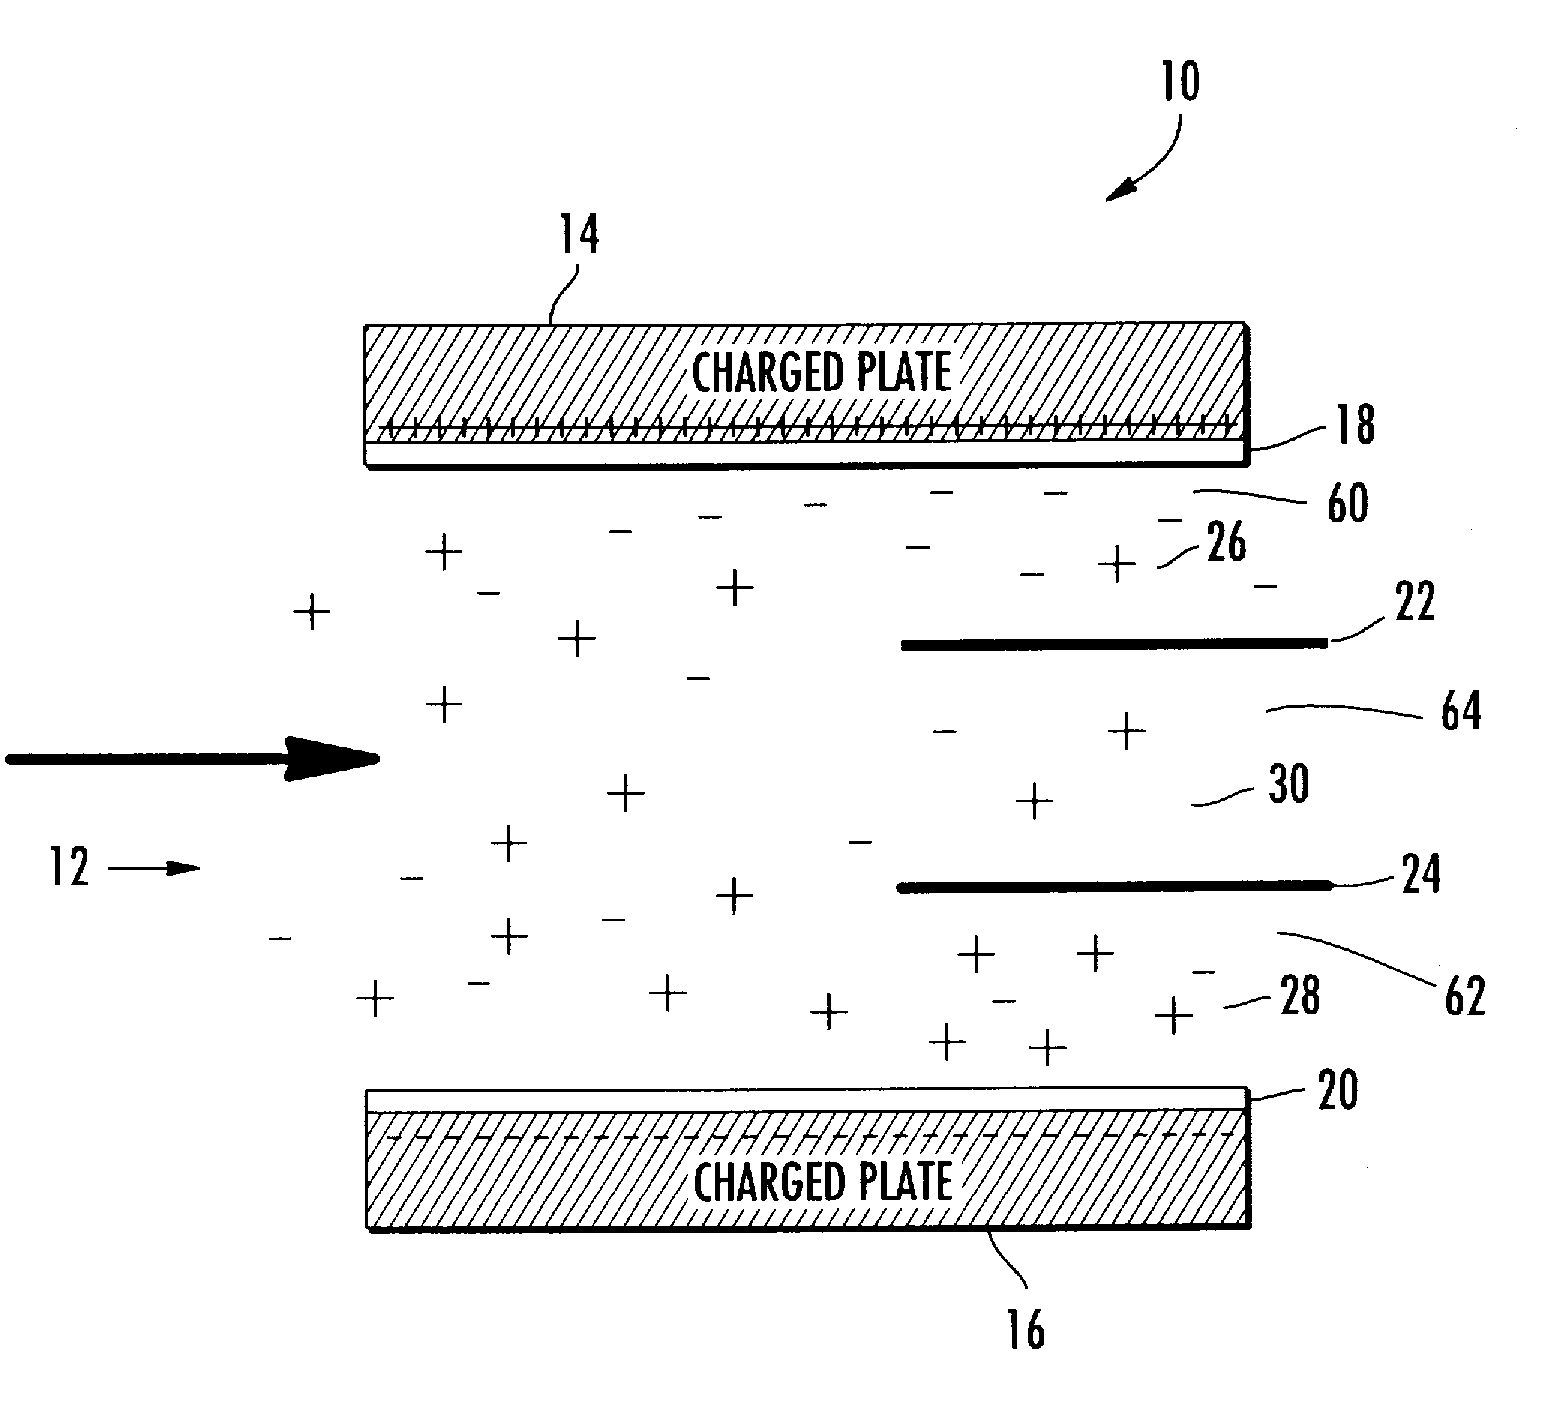 Microscale capacitive deionization apparatus